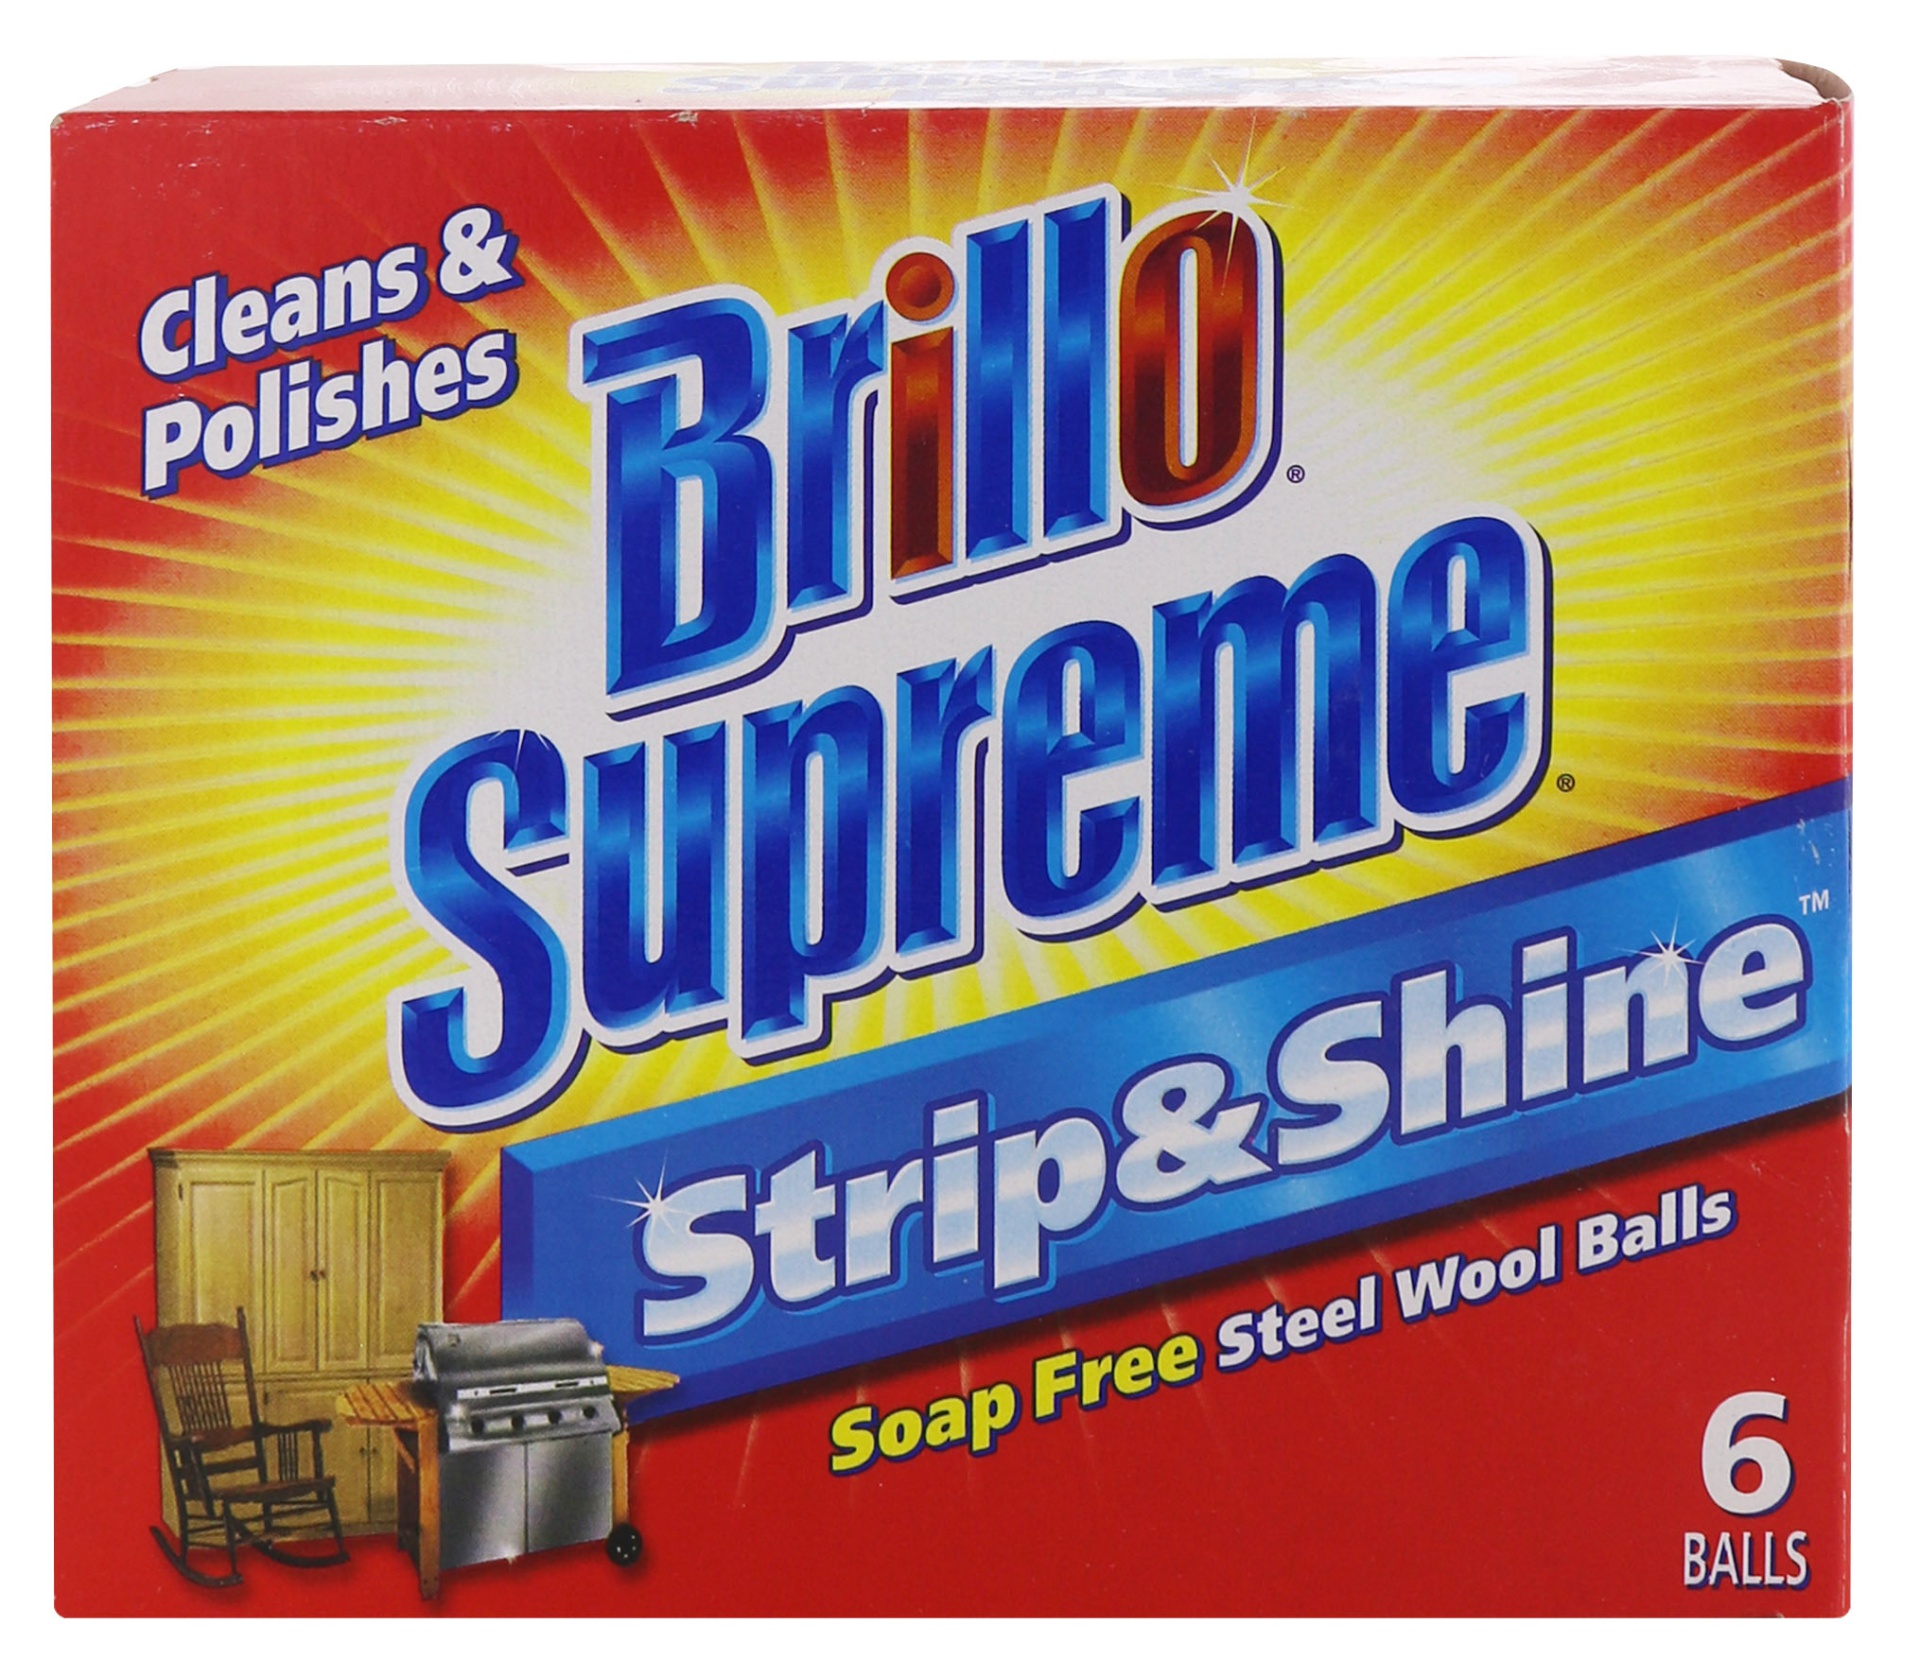 slide 1 of 1, Brillo Supreme Strip & Shine Soap Free Steel Wool Balls, 6 ct